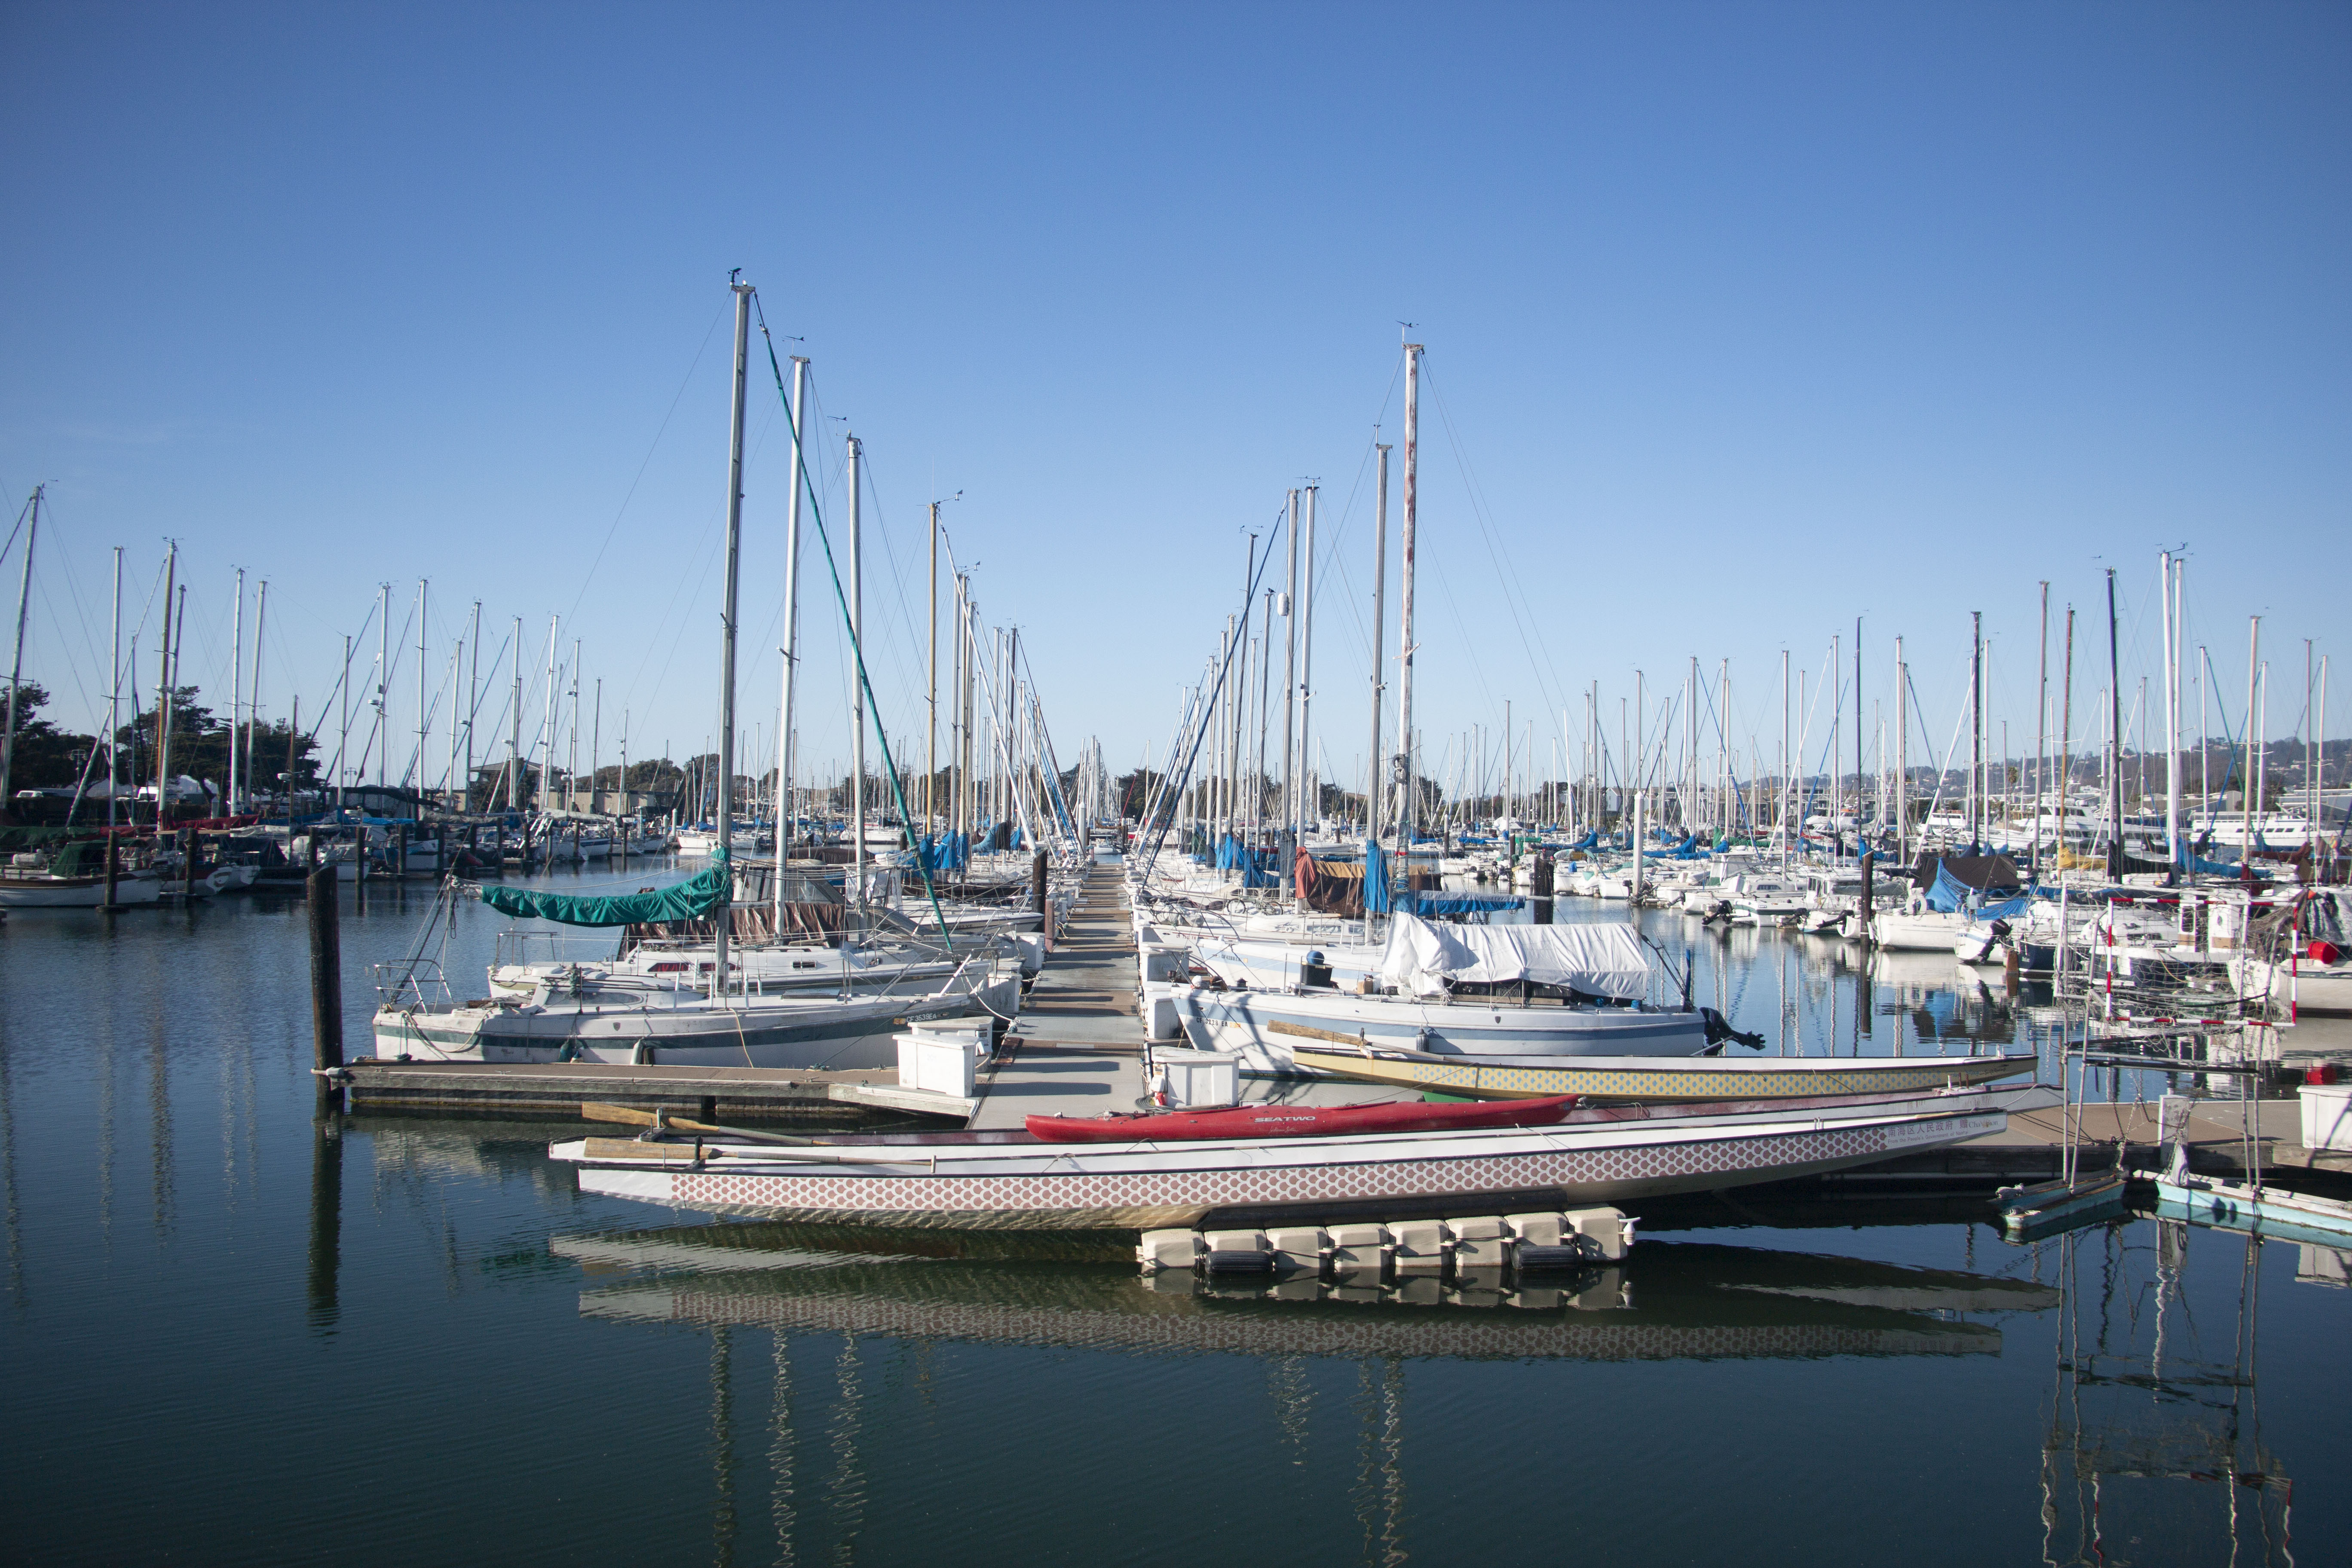 Dock M at Berkeley Marina, sailboats were parked there.